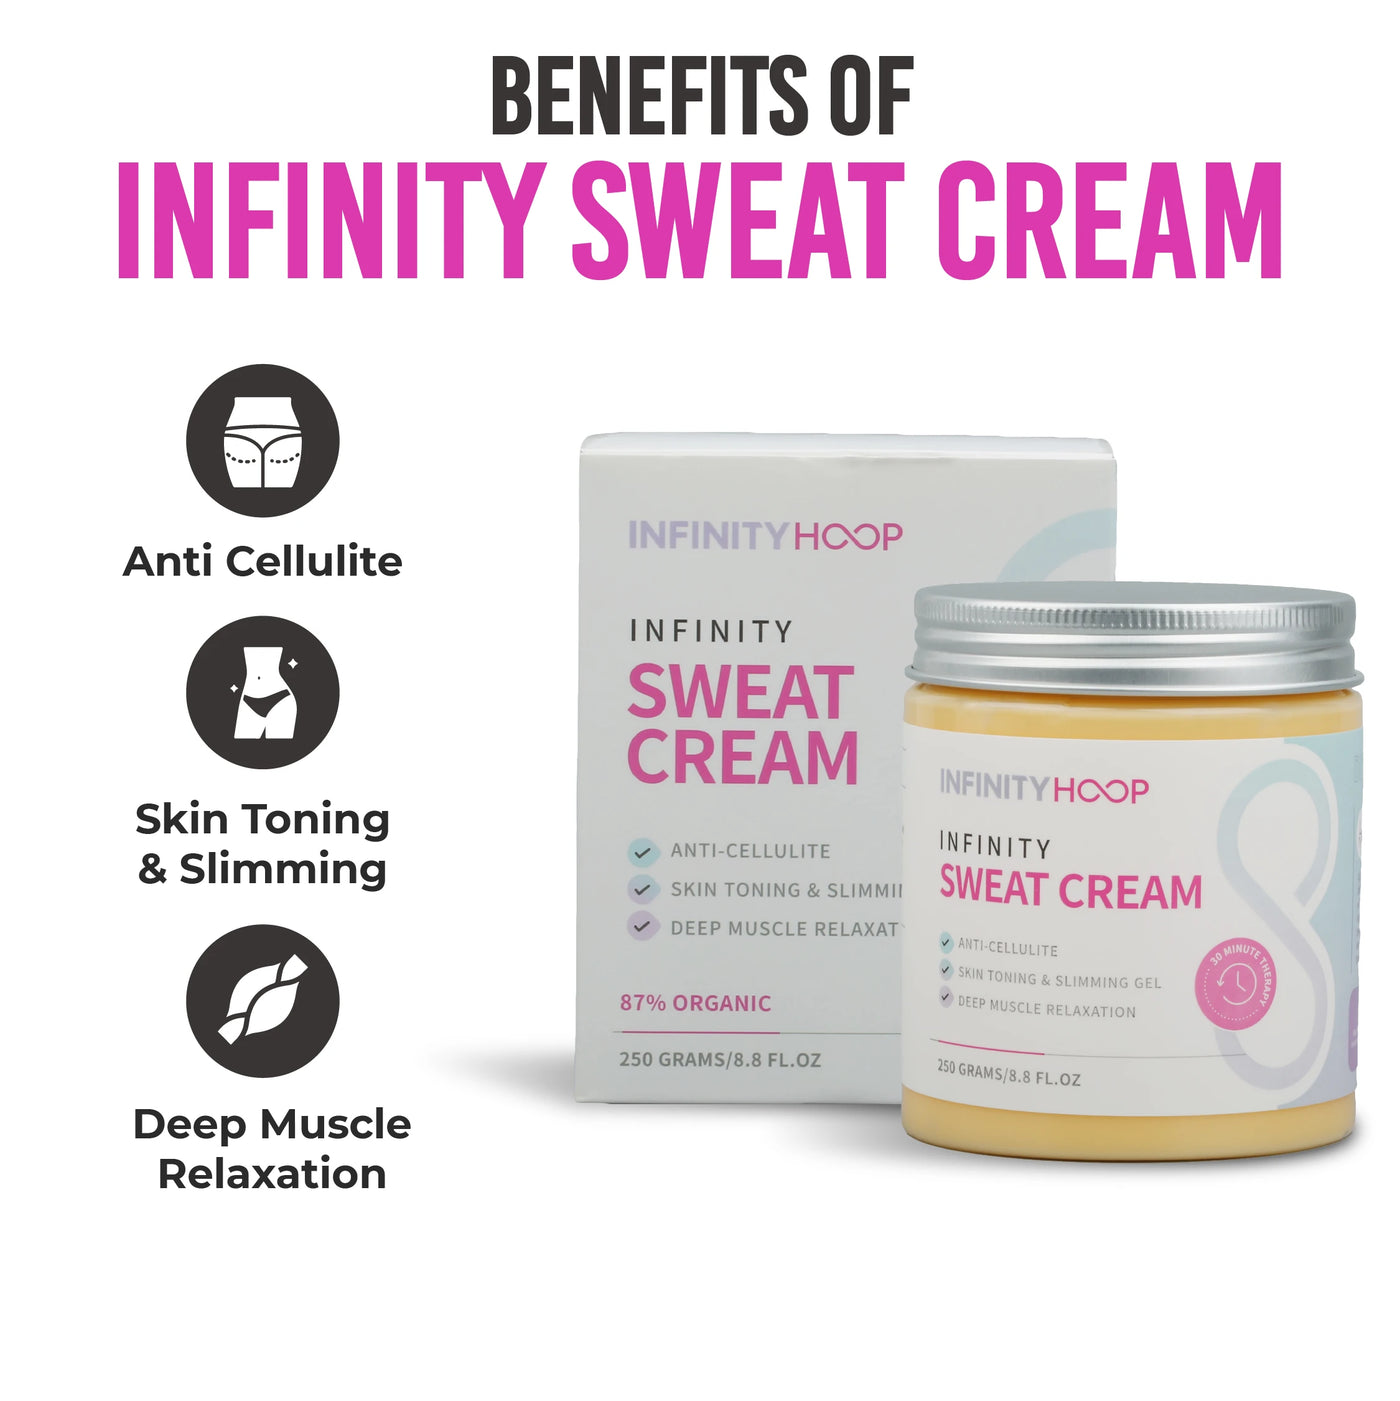 Infinity Sweat Cream